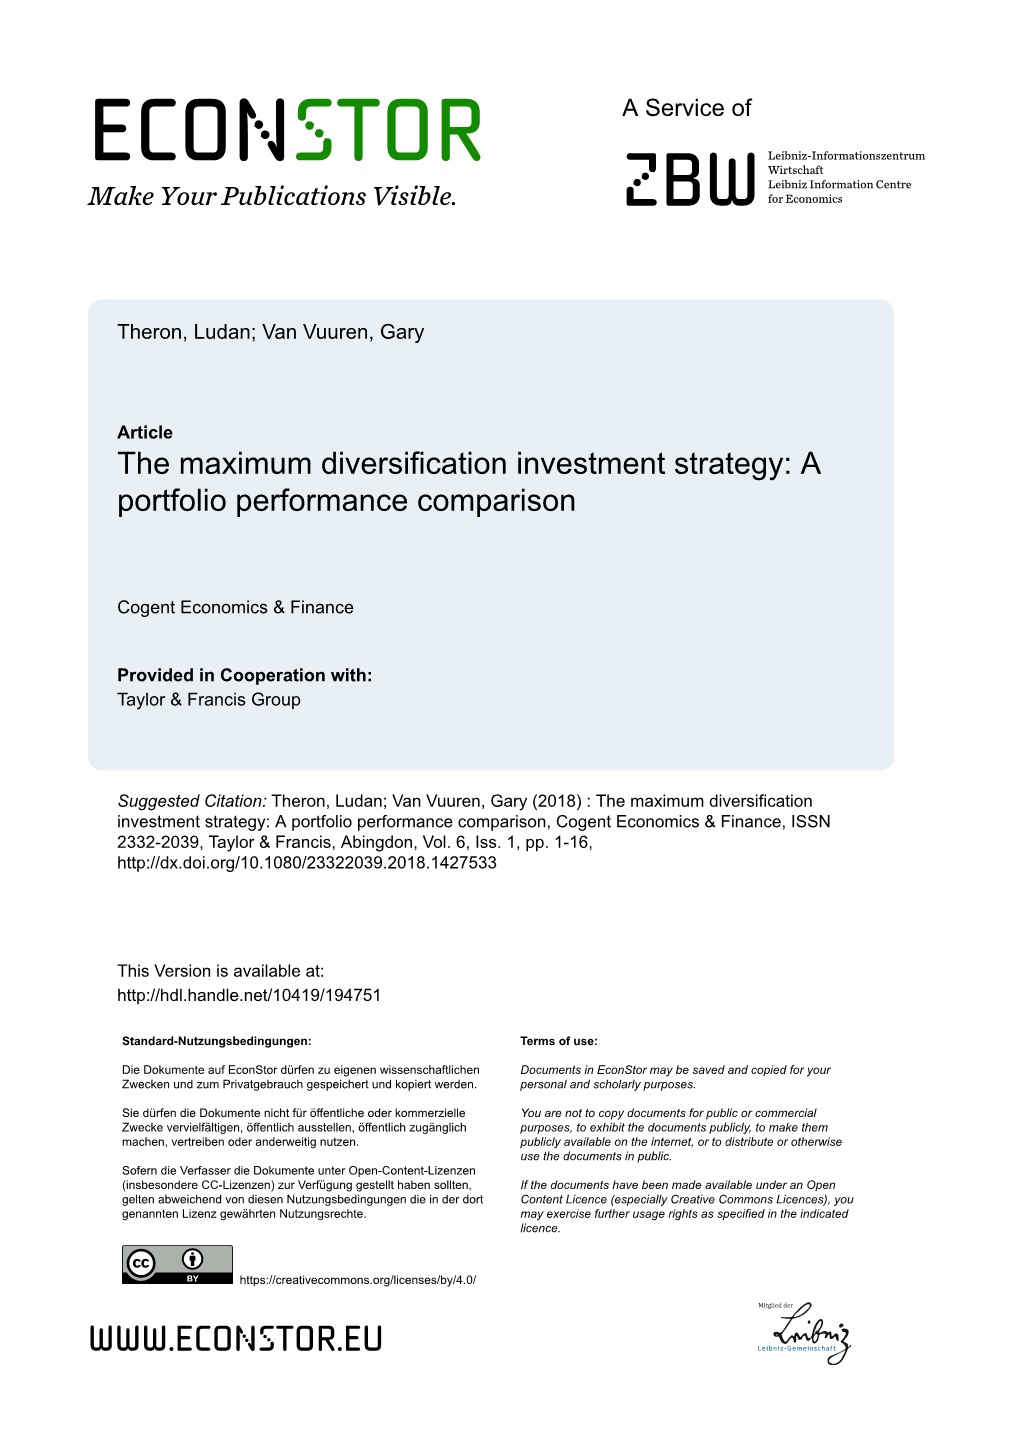 The Maximum Diversification Investment Strategy: a Portfolio Performance Comparison